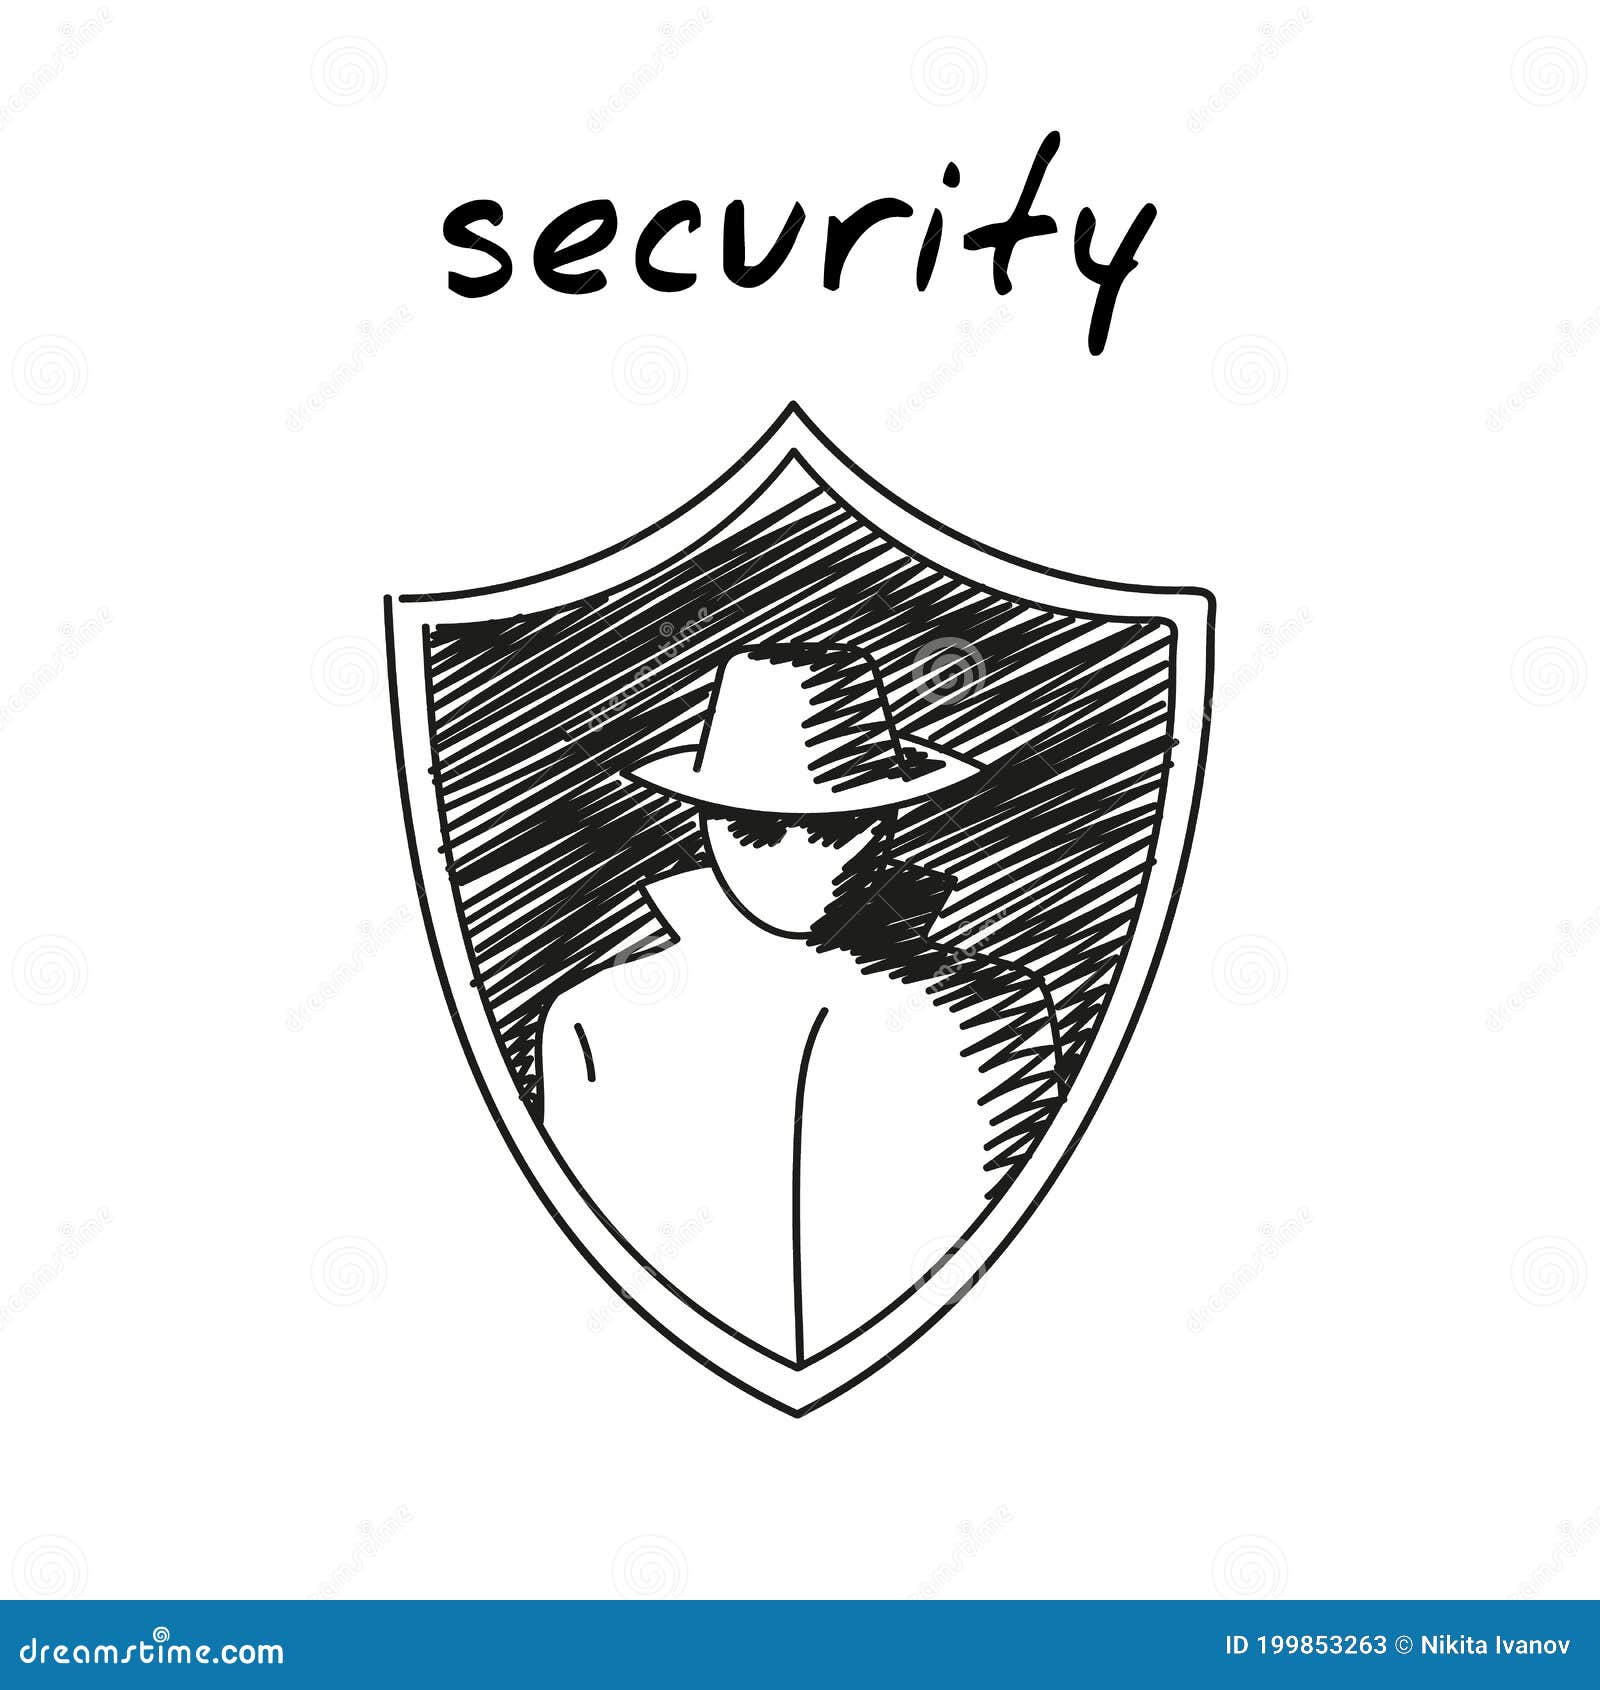 Security Badge Shield Handdrawn Icon. Cartoon Vector Clip Art of a